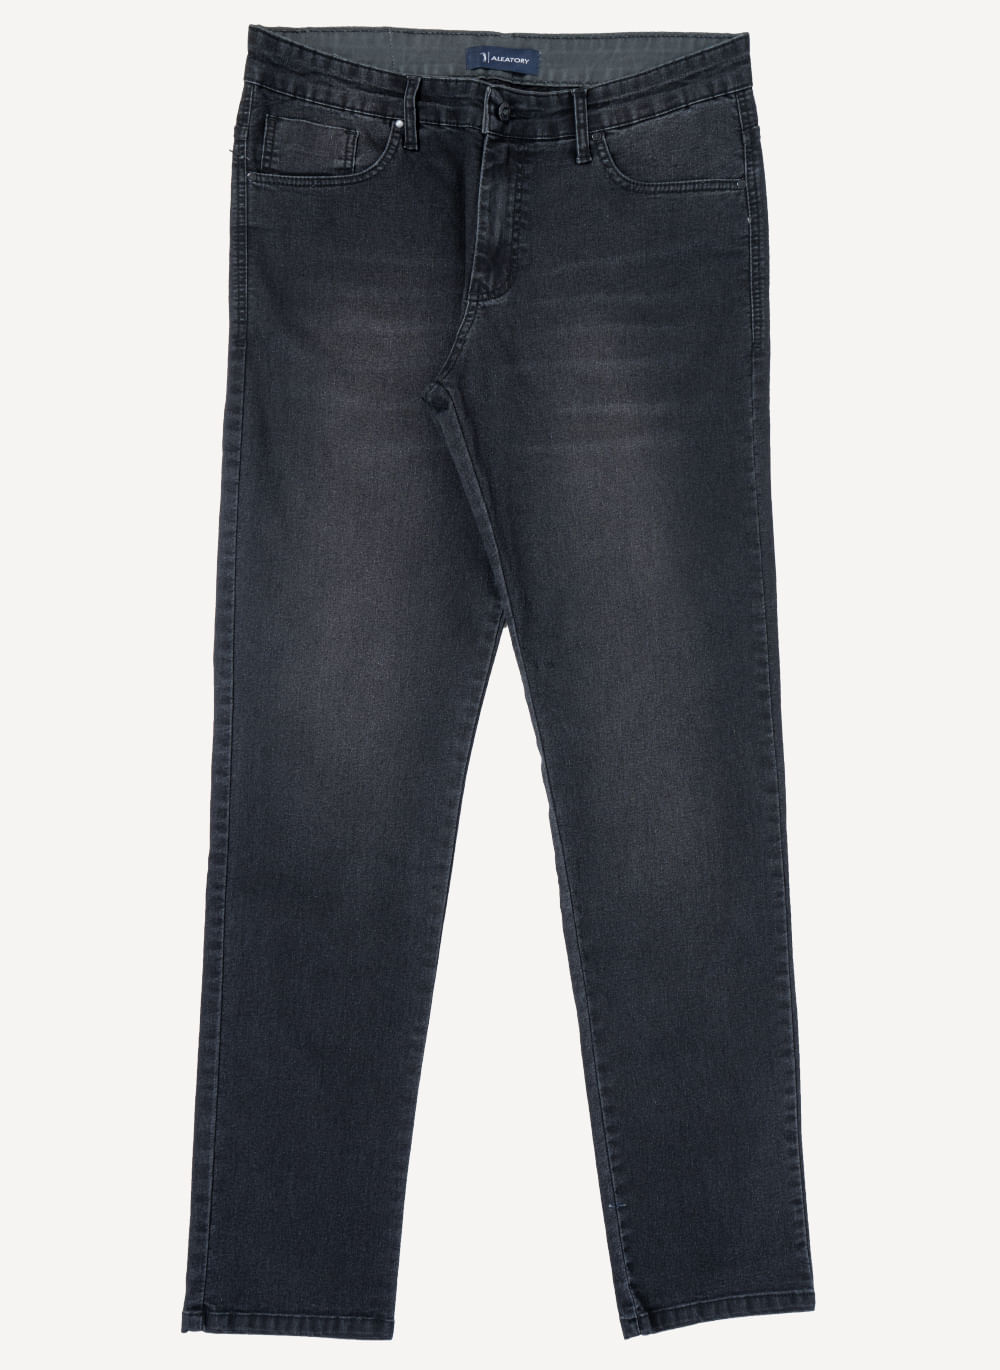 https---s3-sa-east-1.amazonaws.com-softvar-Zetop-58972-img_original-calca-masculina-jeans-modelo-dark-1-